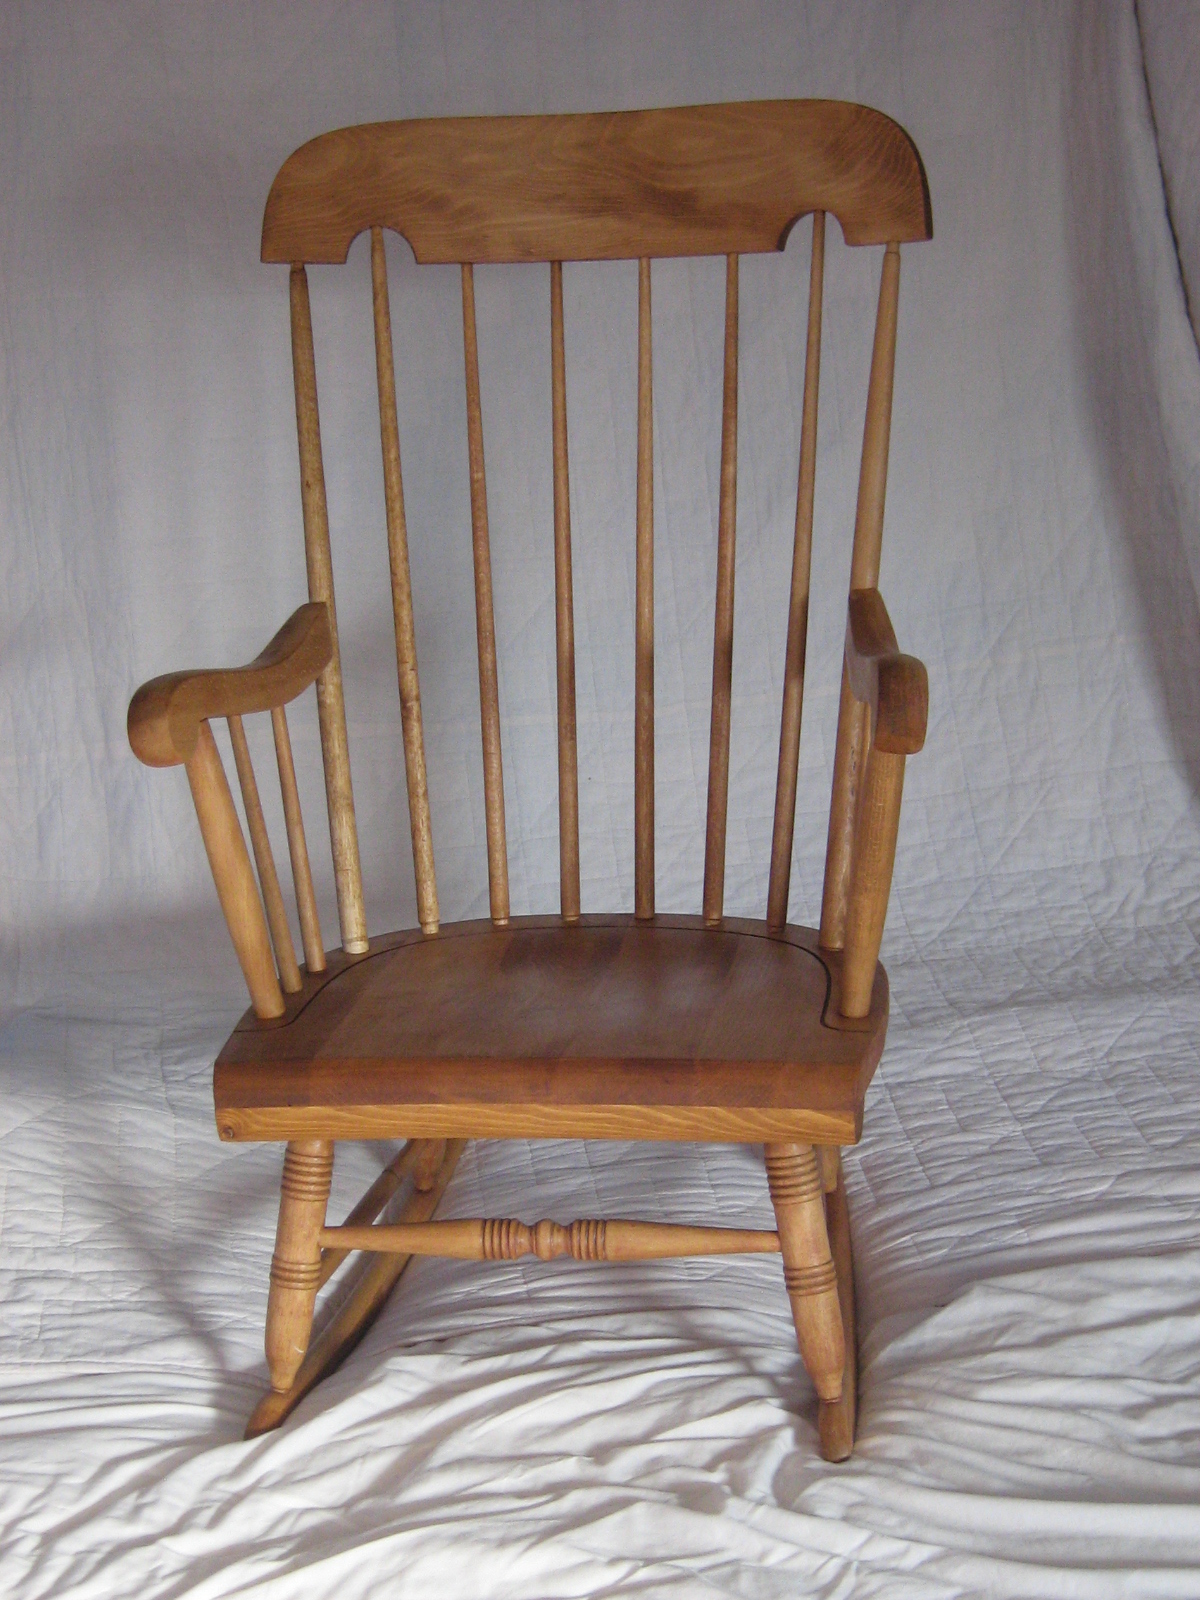 Canadian Woodworker: Rocking chair repair